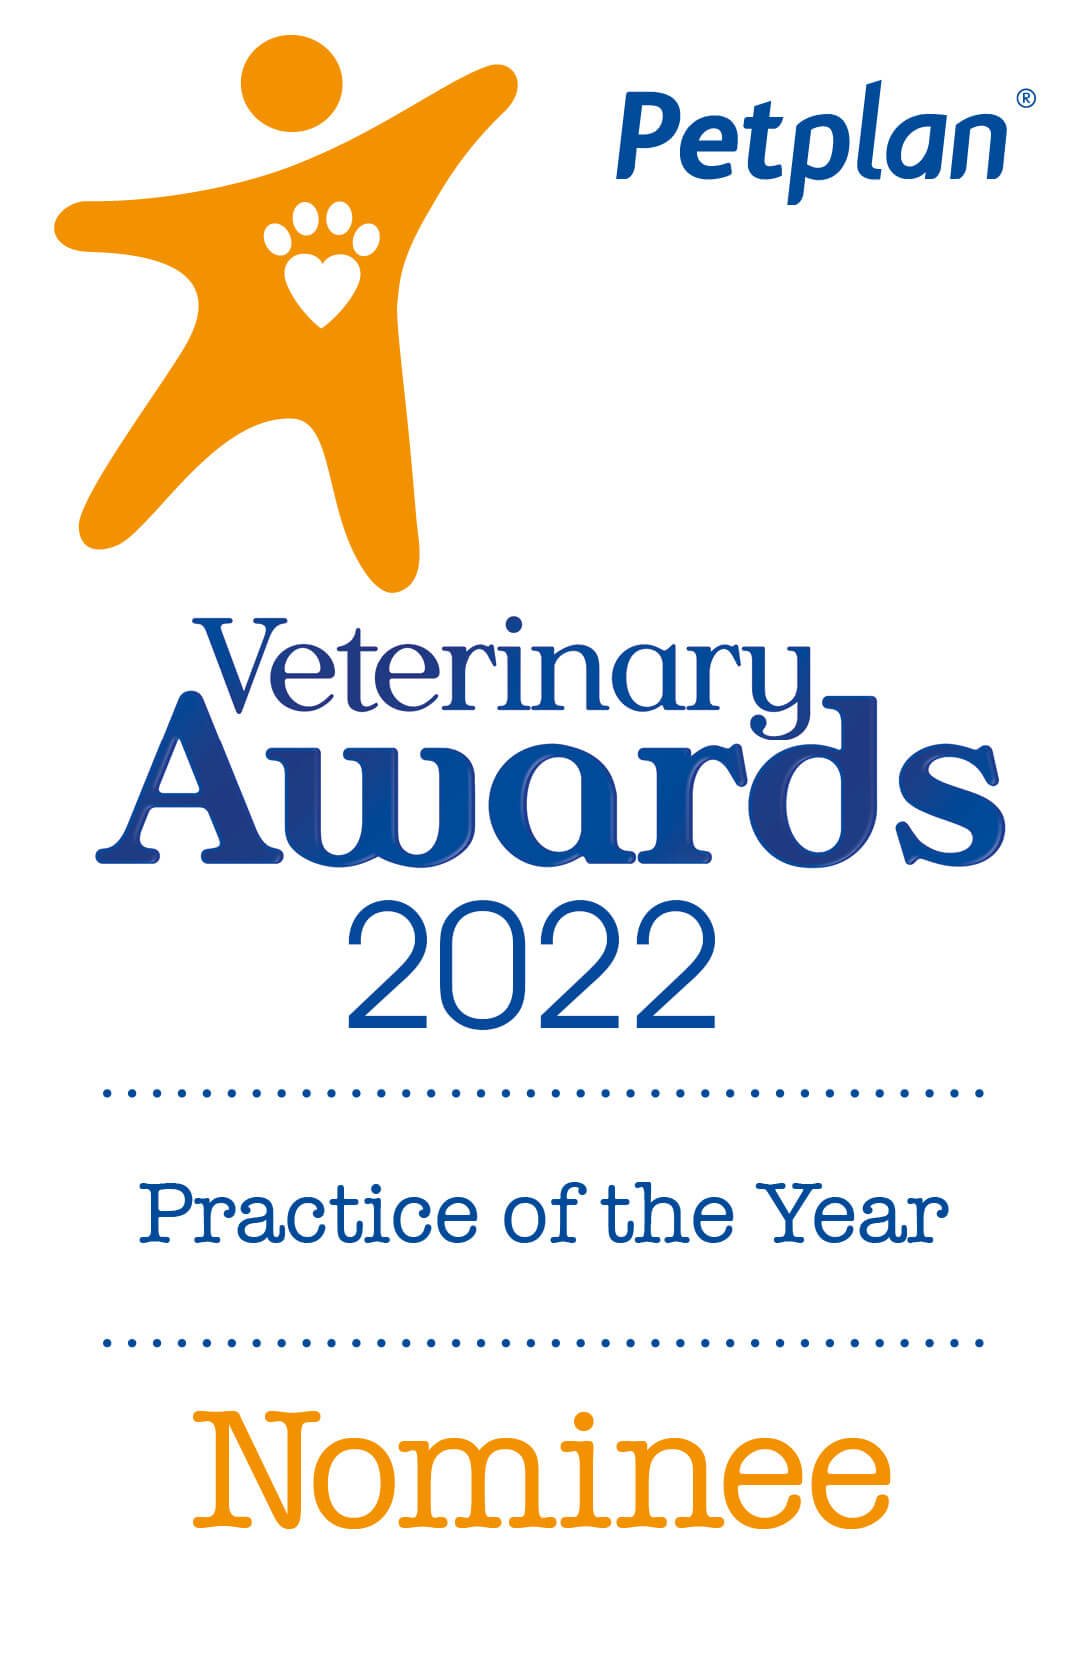 Petplan Veterinary Awards Nomination